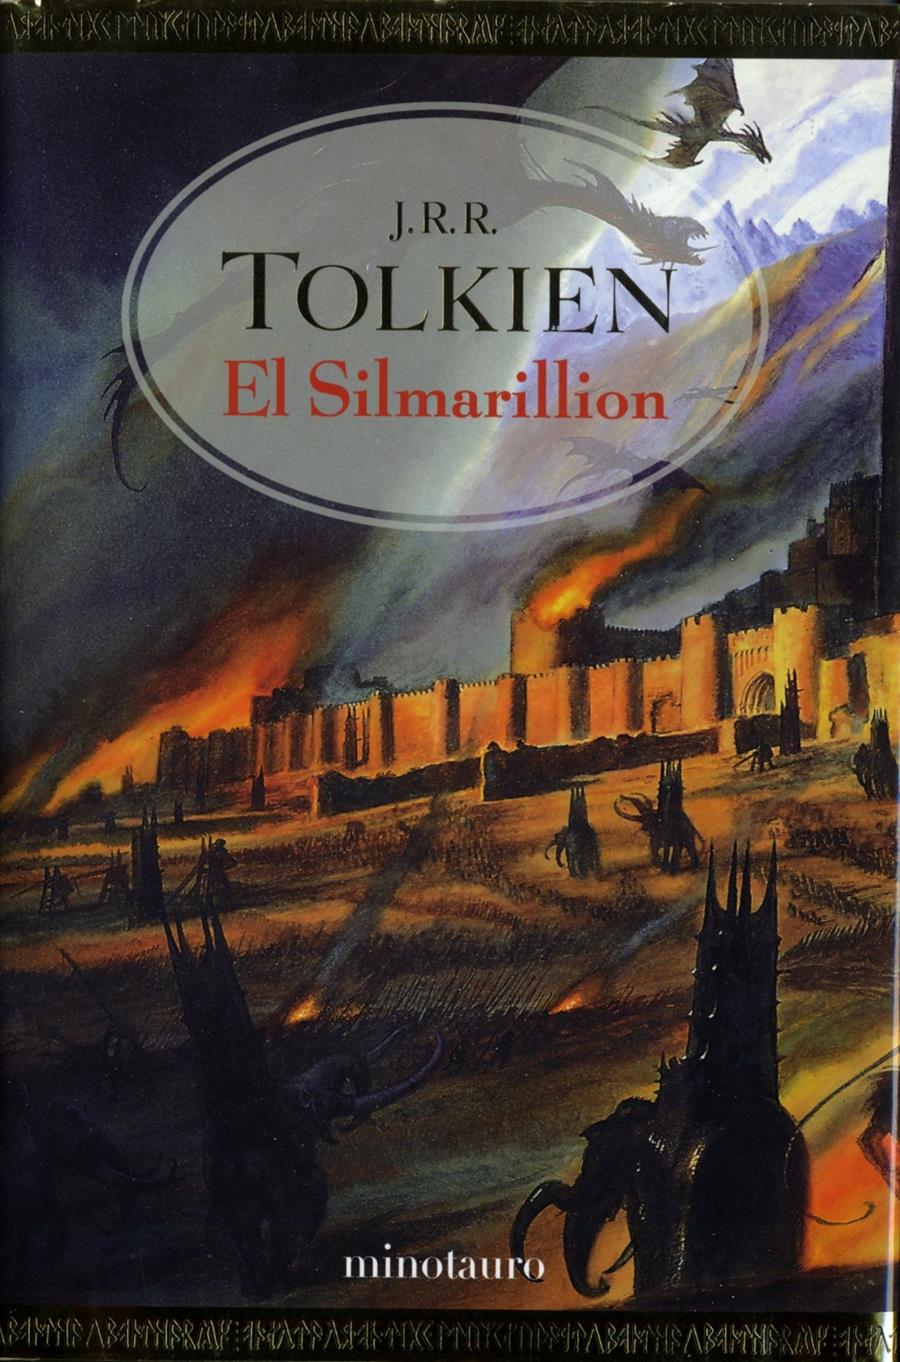 El Silmarillion | N0322-LIB030 | J. R. R. Tolkien | Terra de Còmic - Tu tienda de cómics online especializada en cómics, manga y merchandising